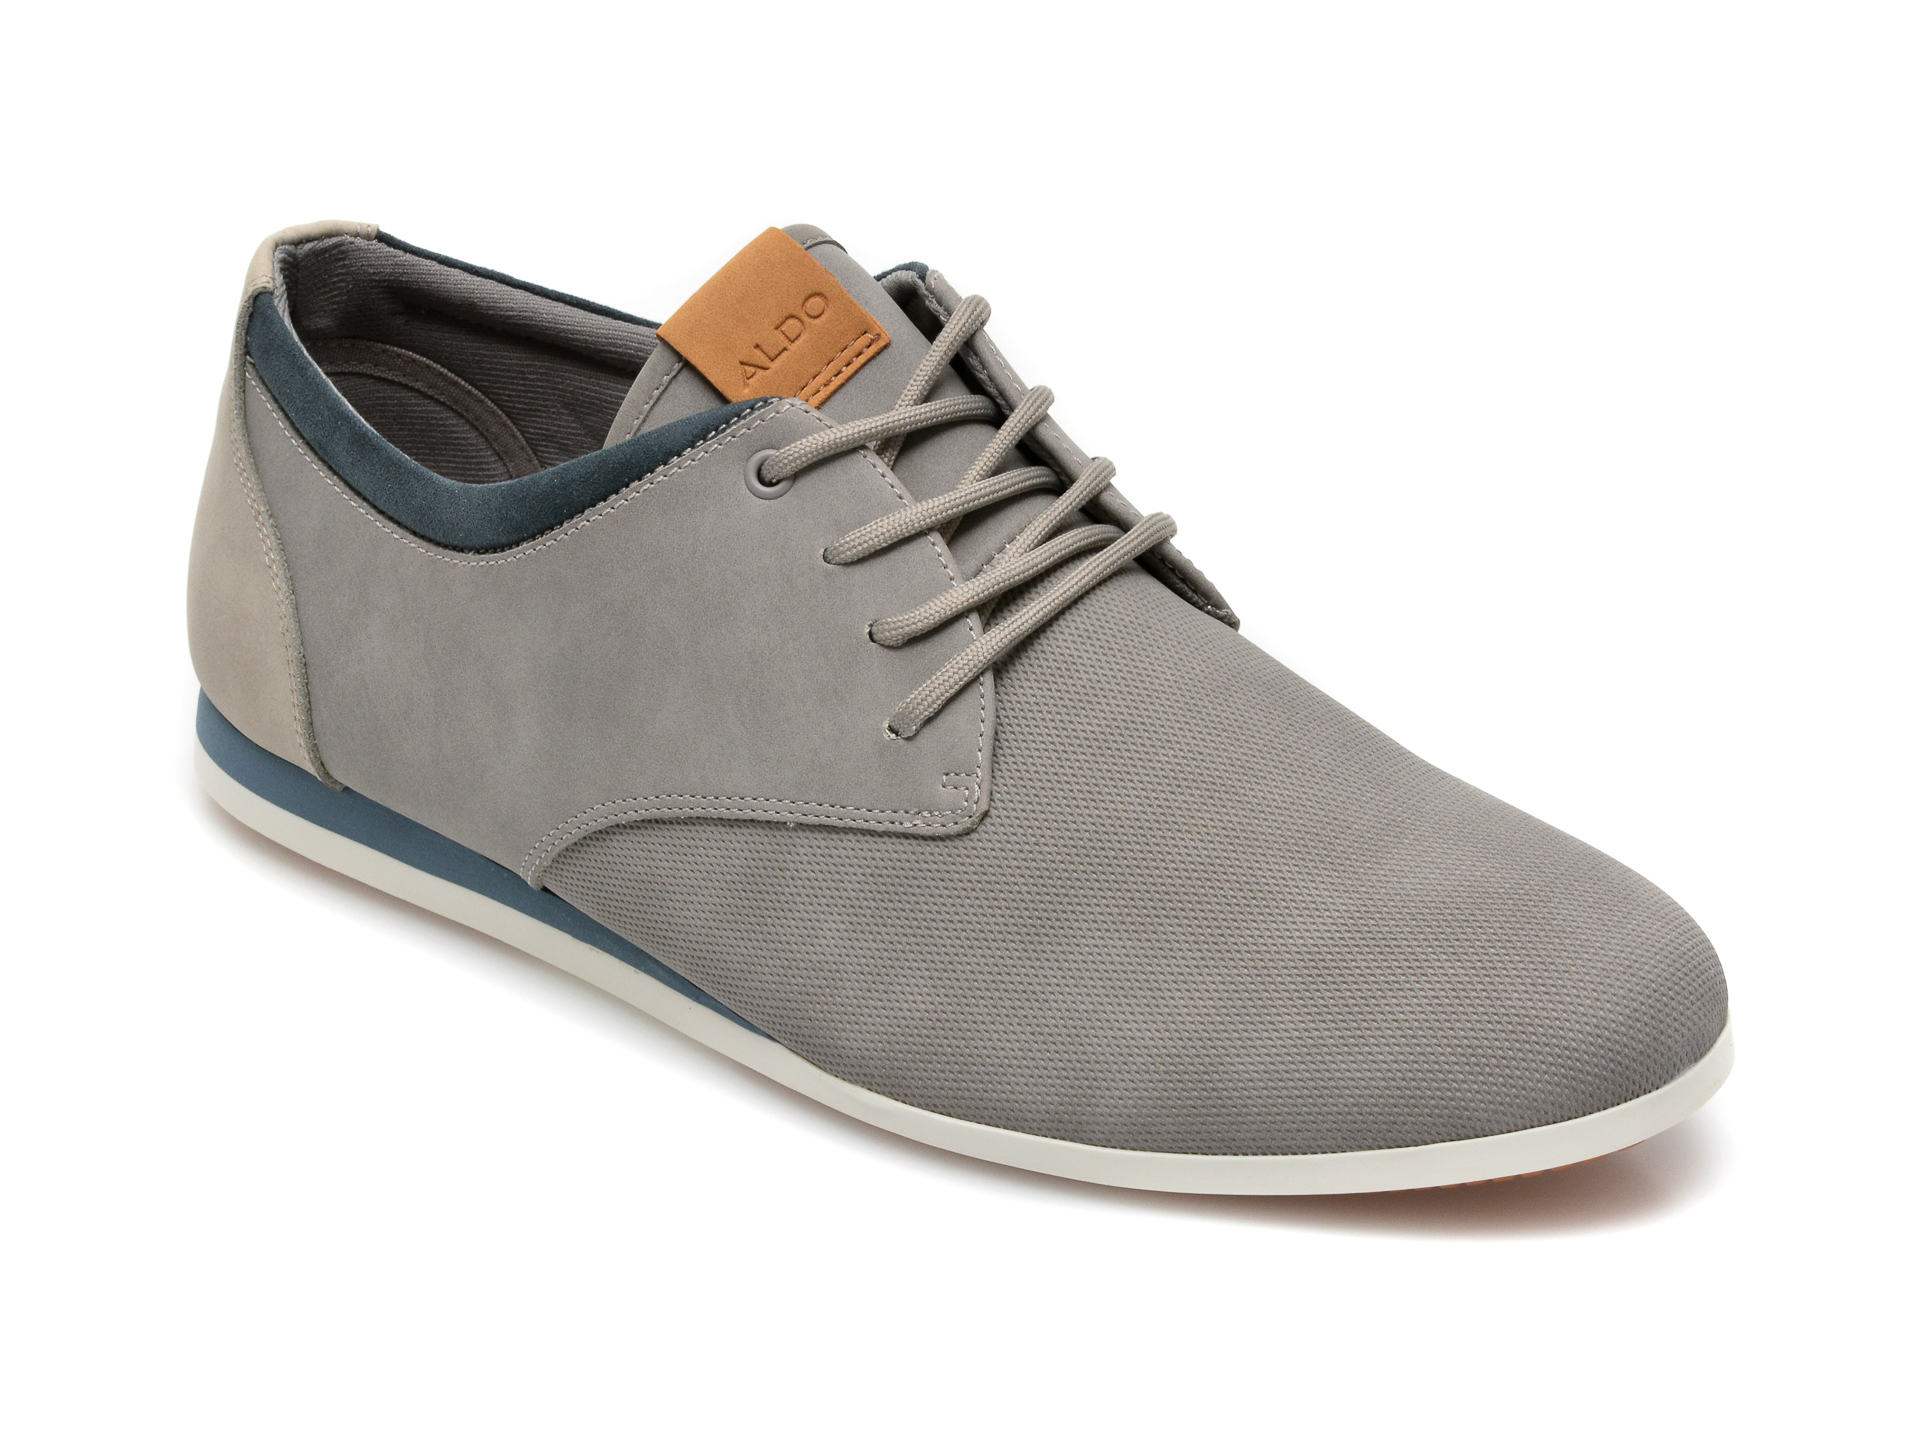 Pantofi ALDO gri, Aauwen-R020, din material textil si piele ecologica